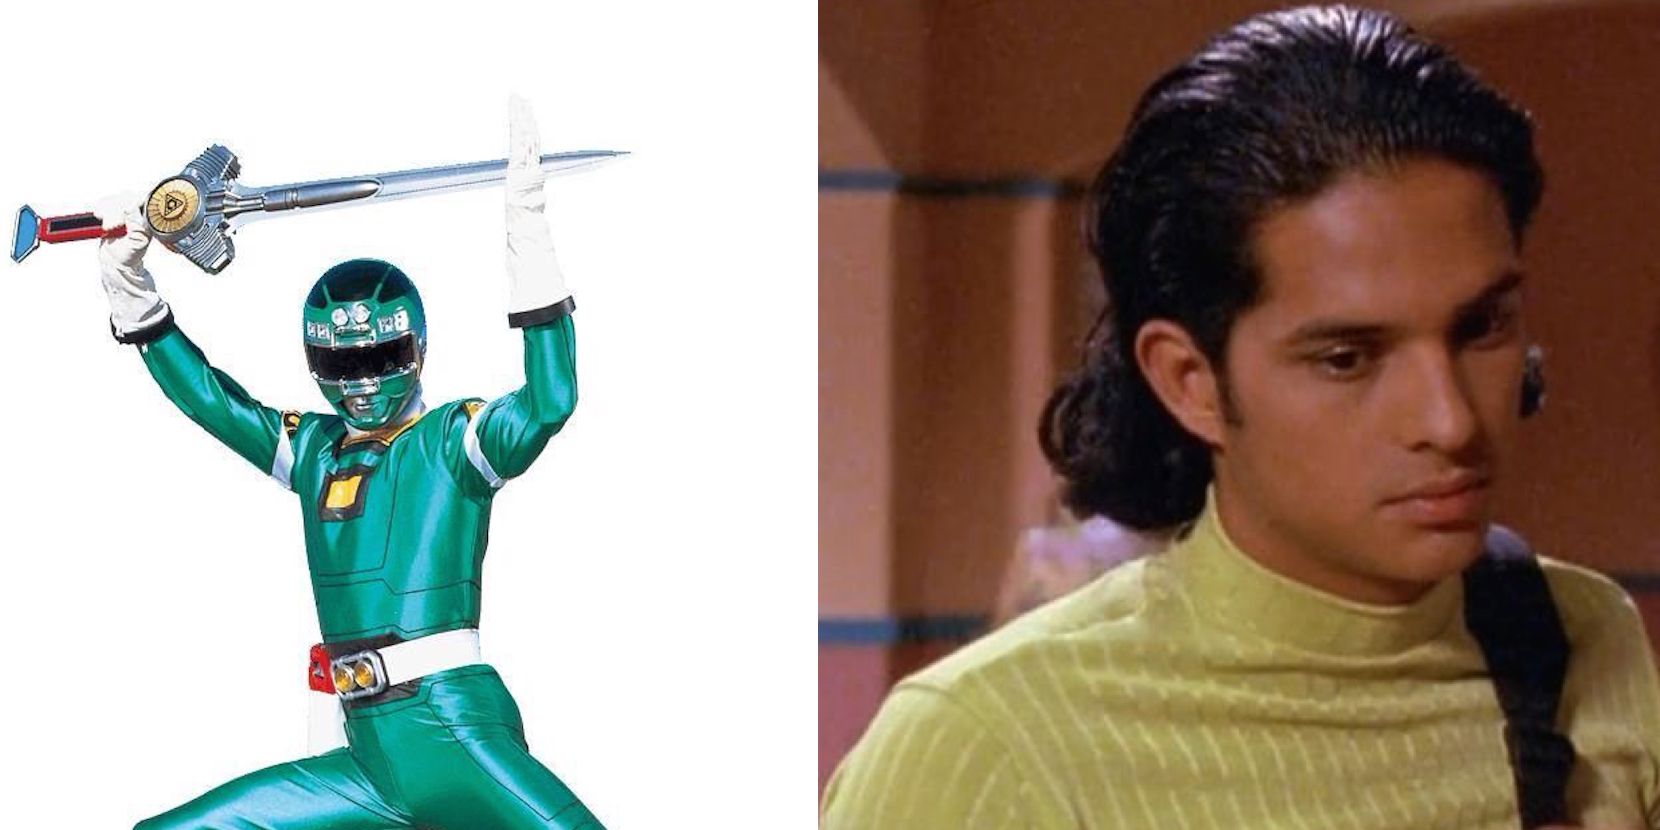 Carlos as the Green Ranger in Power Rangers Turbo